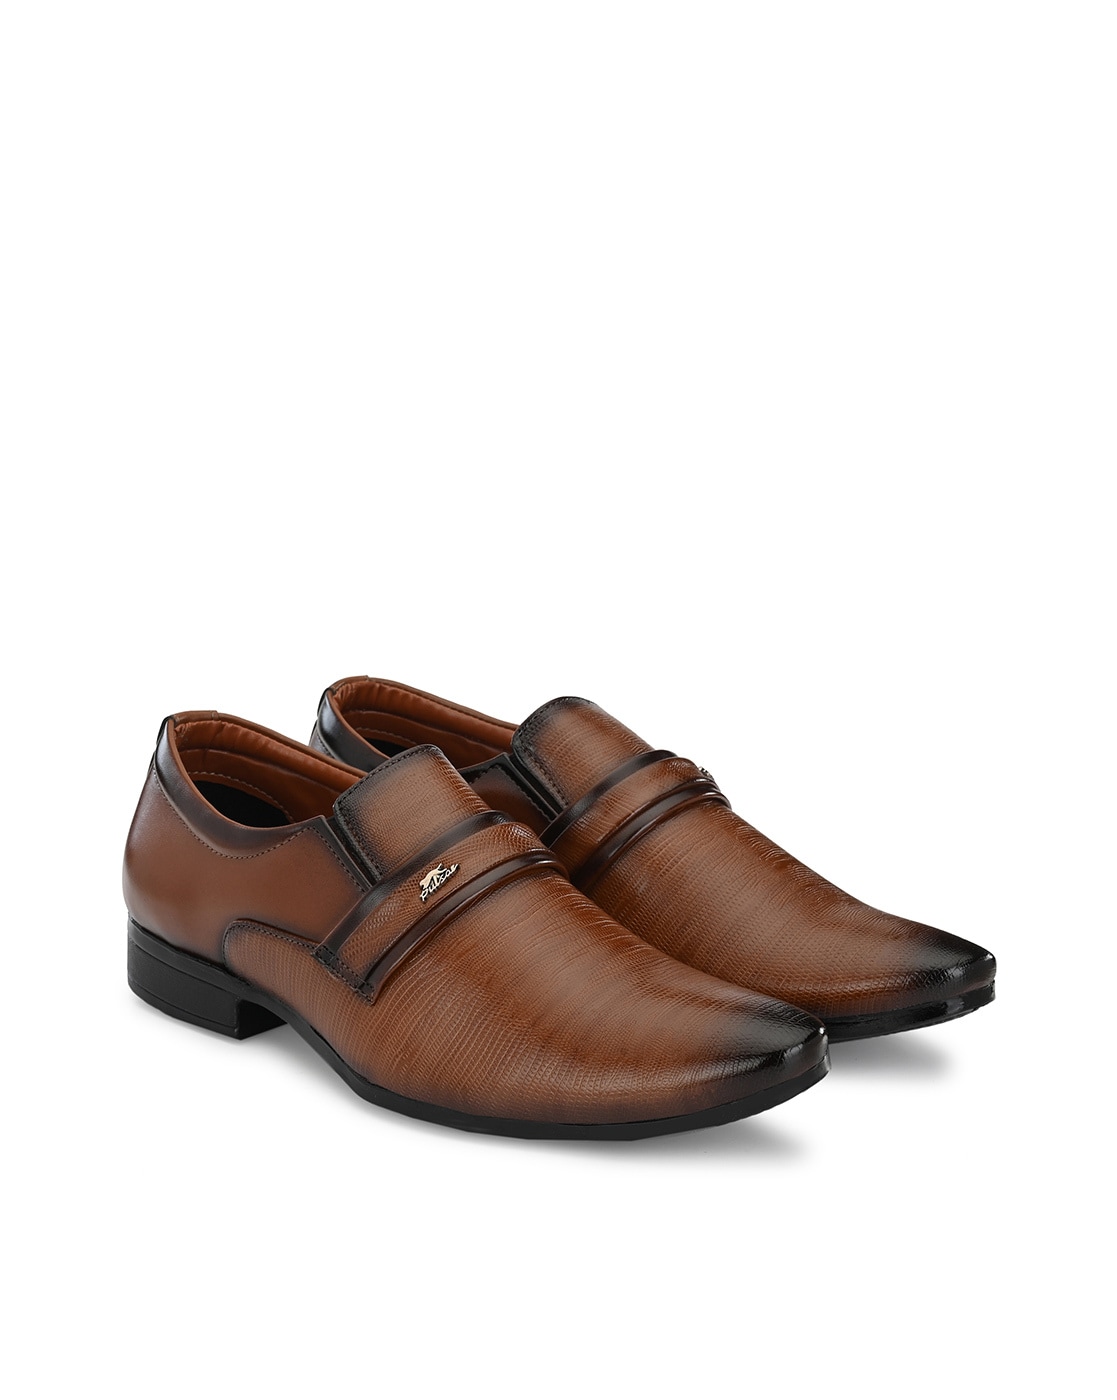 Buy Tan Brown Formal Shoes for Men by RL ROCKLIN MEN Online | Ajio.com